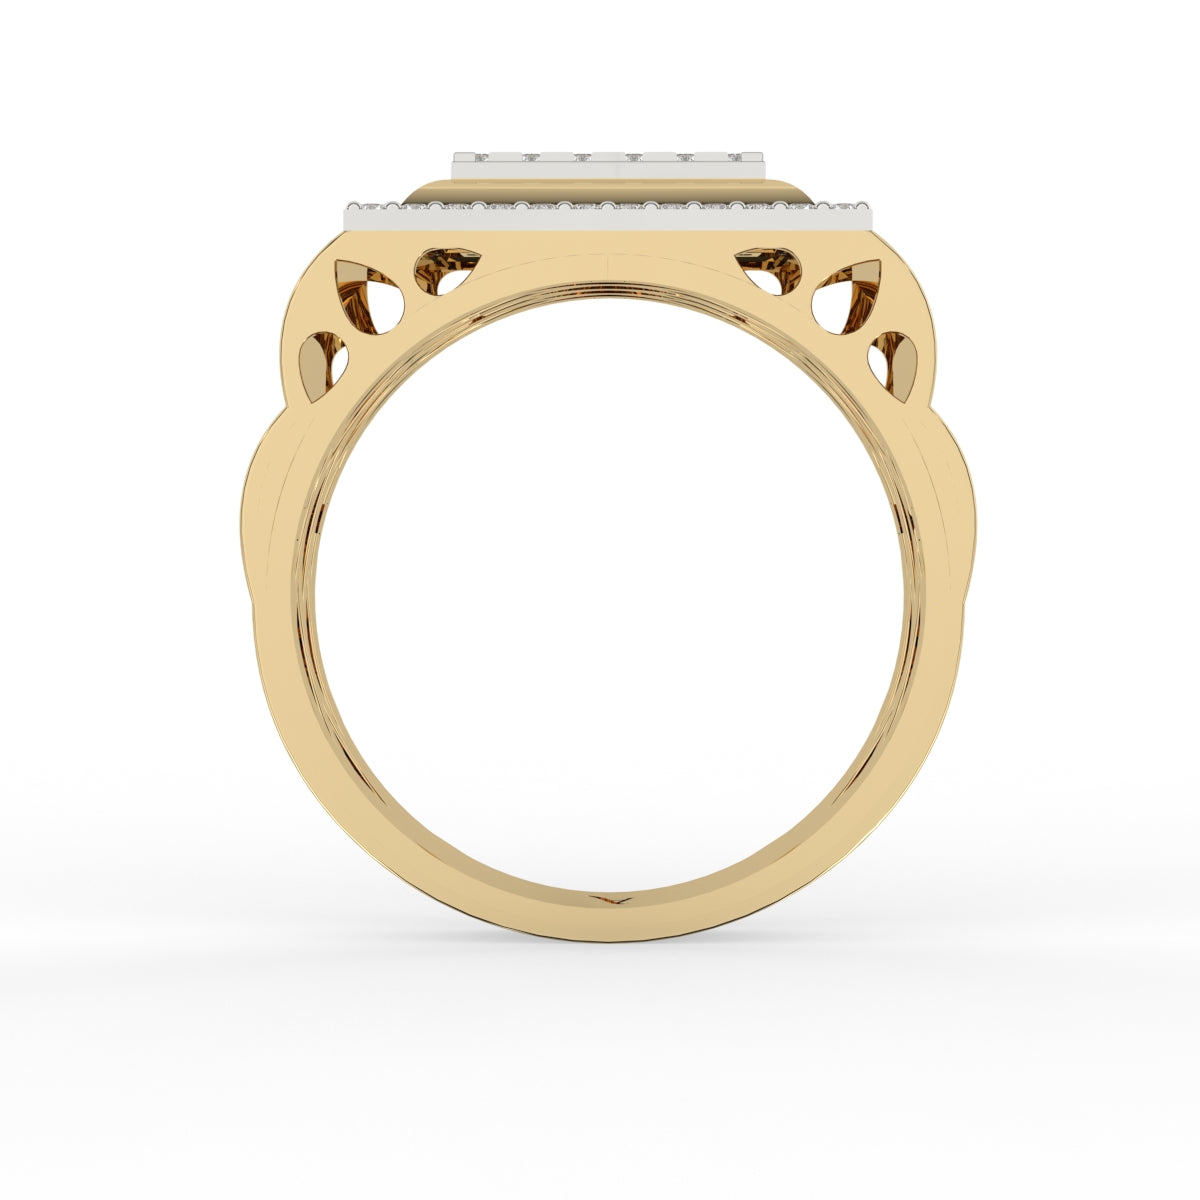 Luxurious Halo Diamond Ring For Men